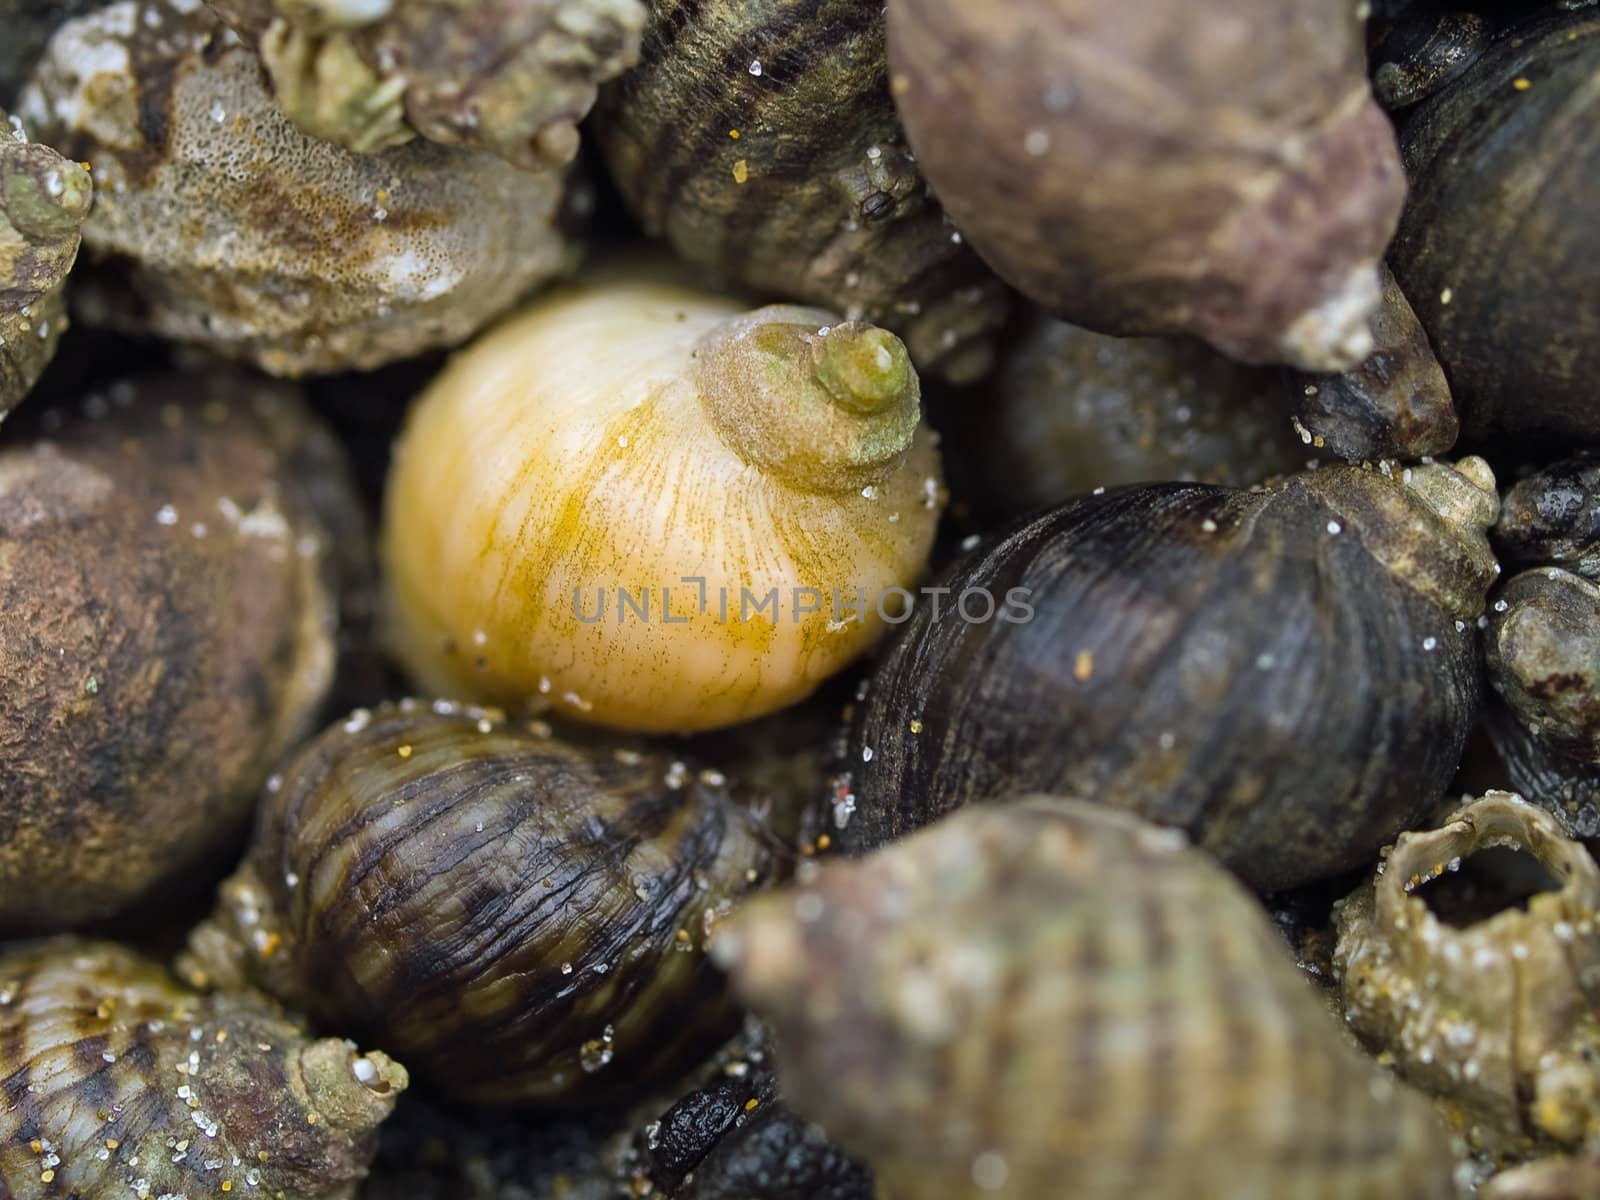 Macro closeups of shells by Frankljunior